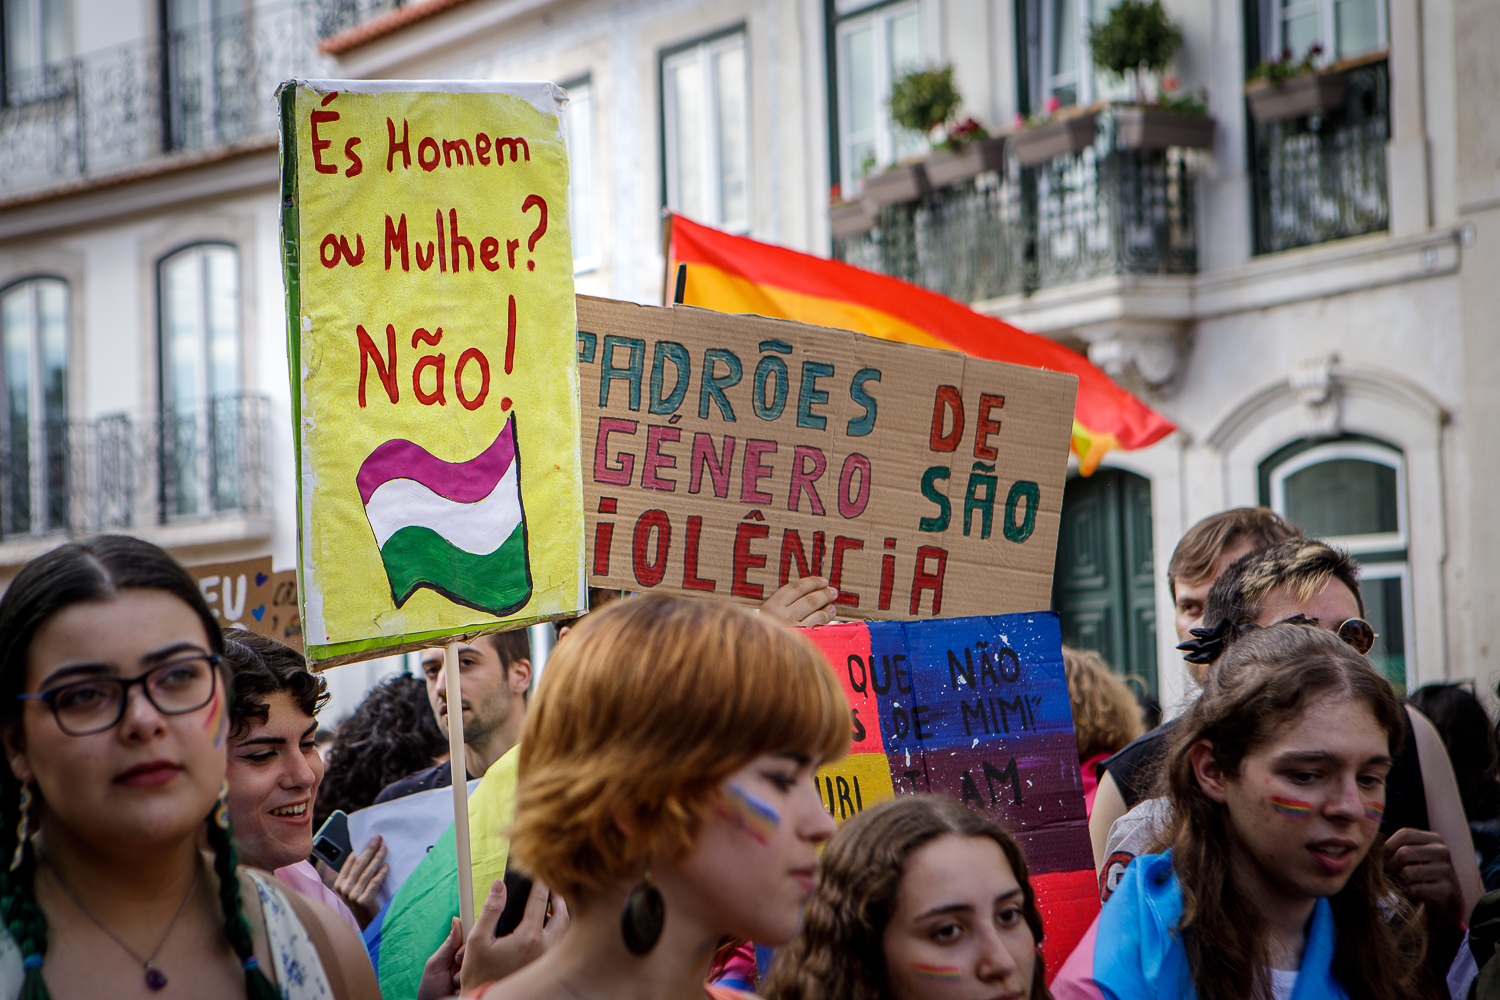 Marcha do Orgulho LGBTI+